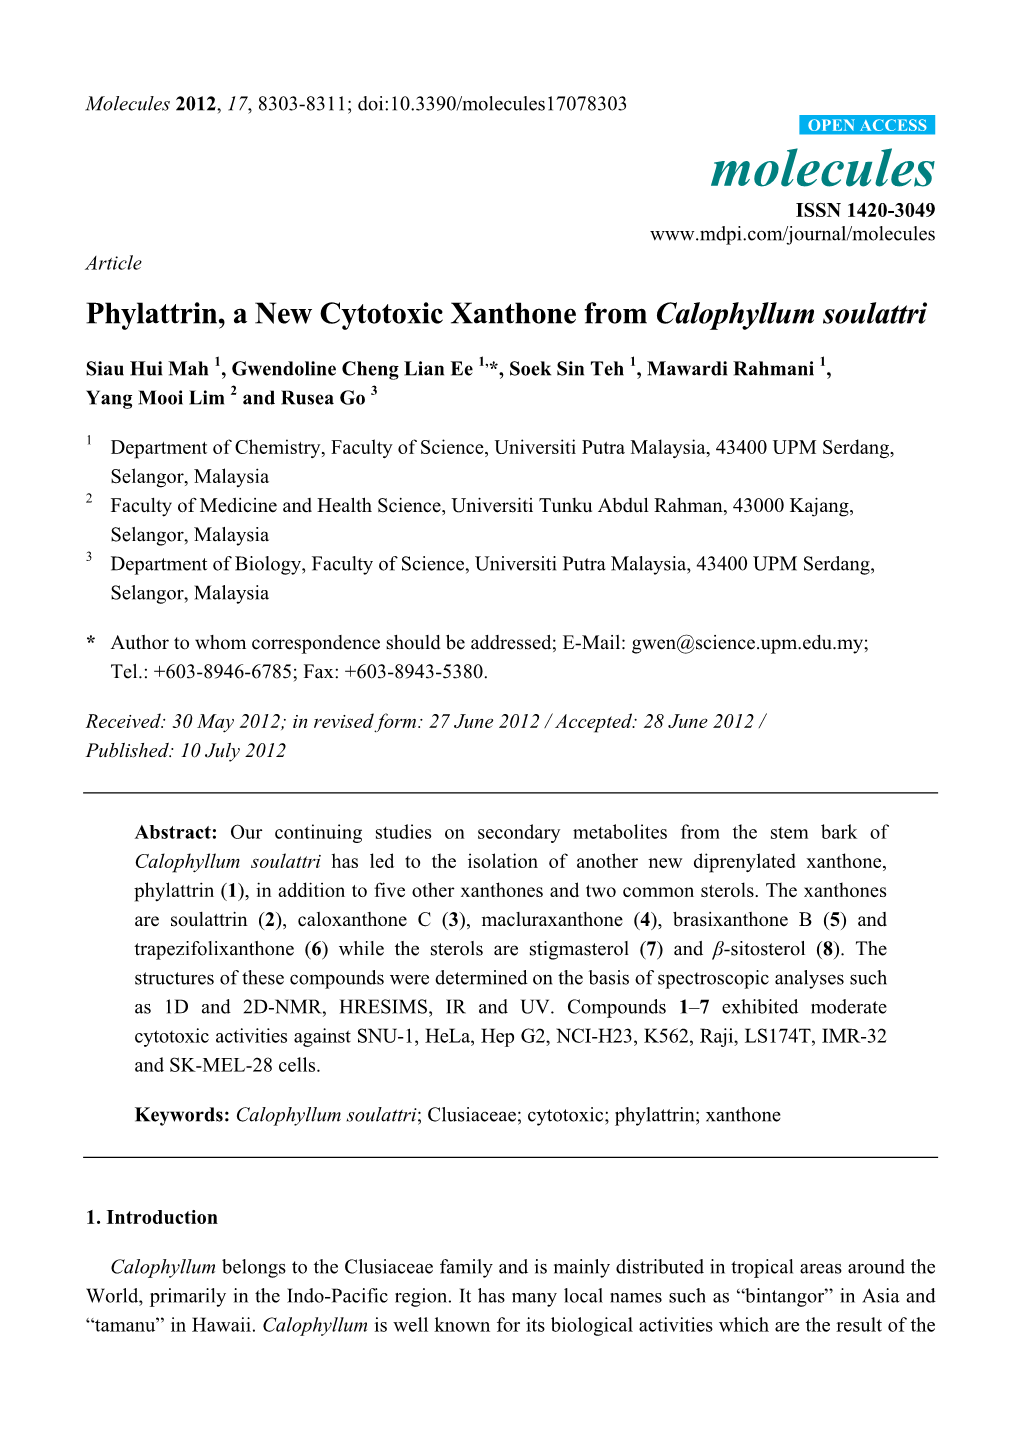 Phylattrin, a New Cytotoxic Xanthone from Calophyllum Soulattri